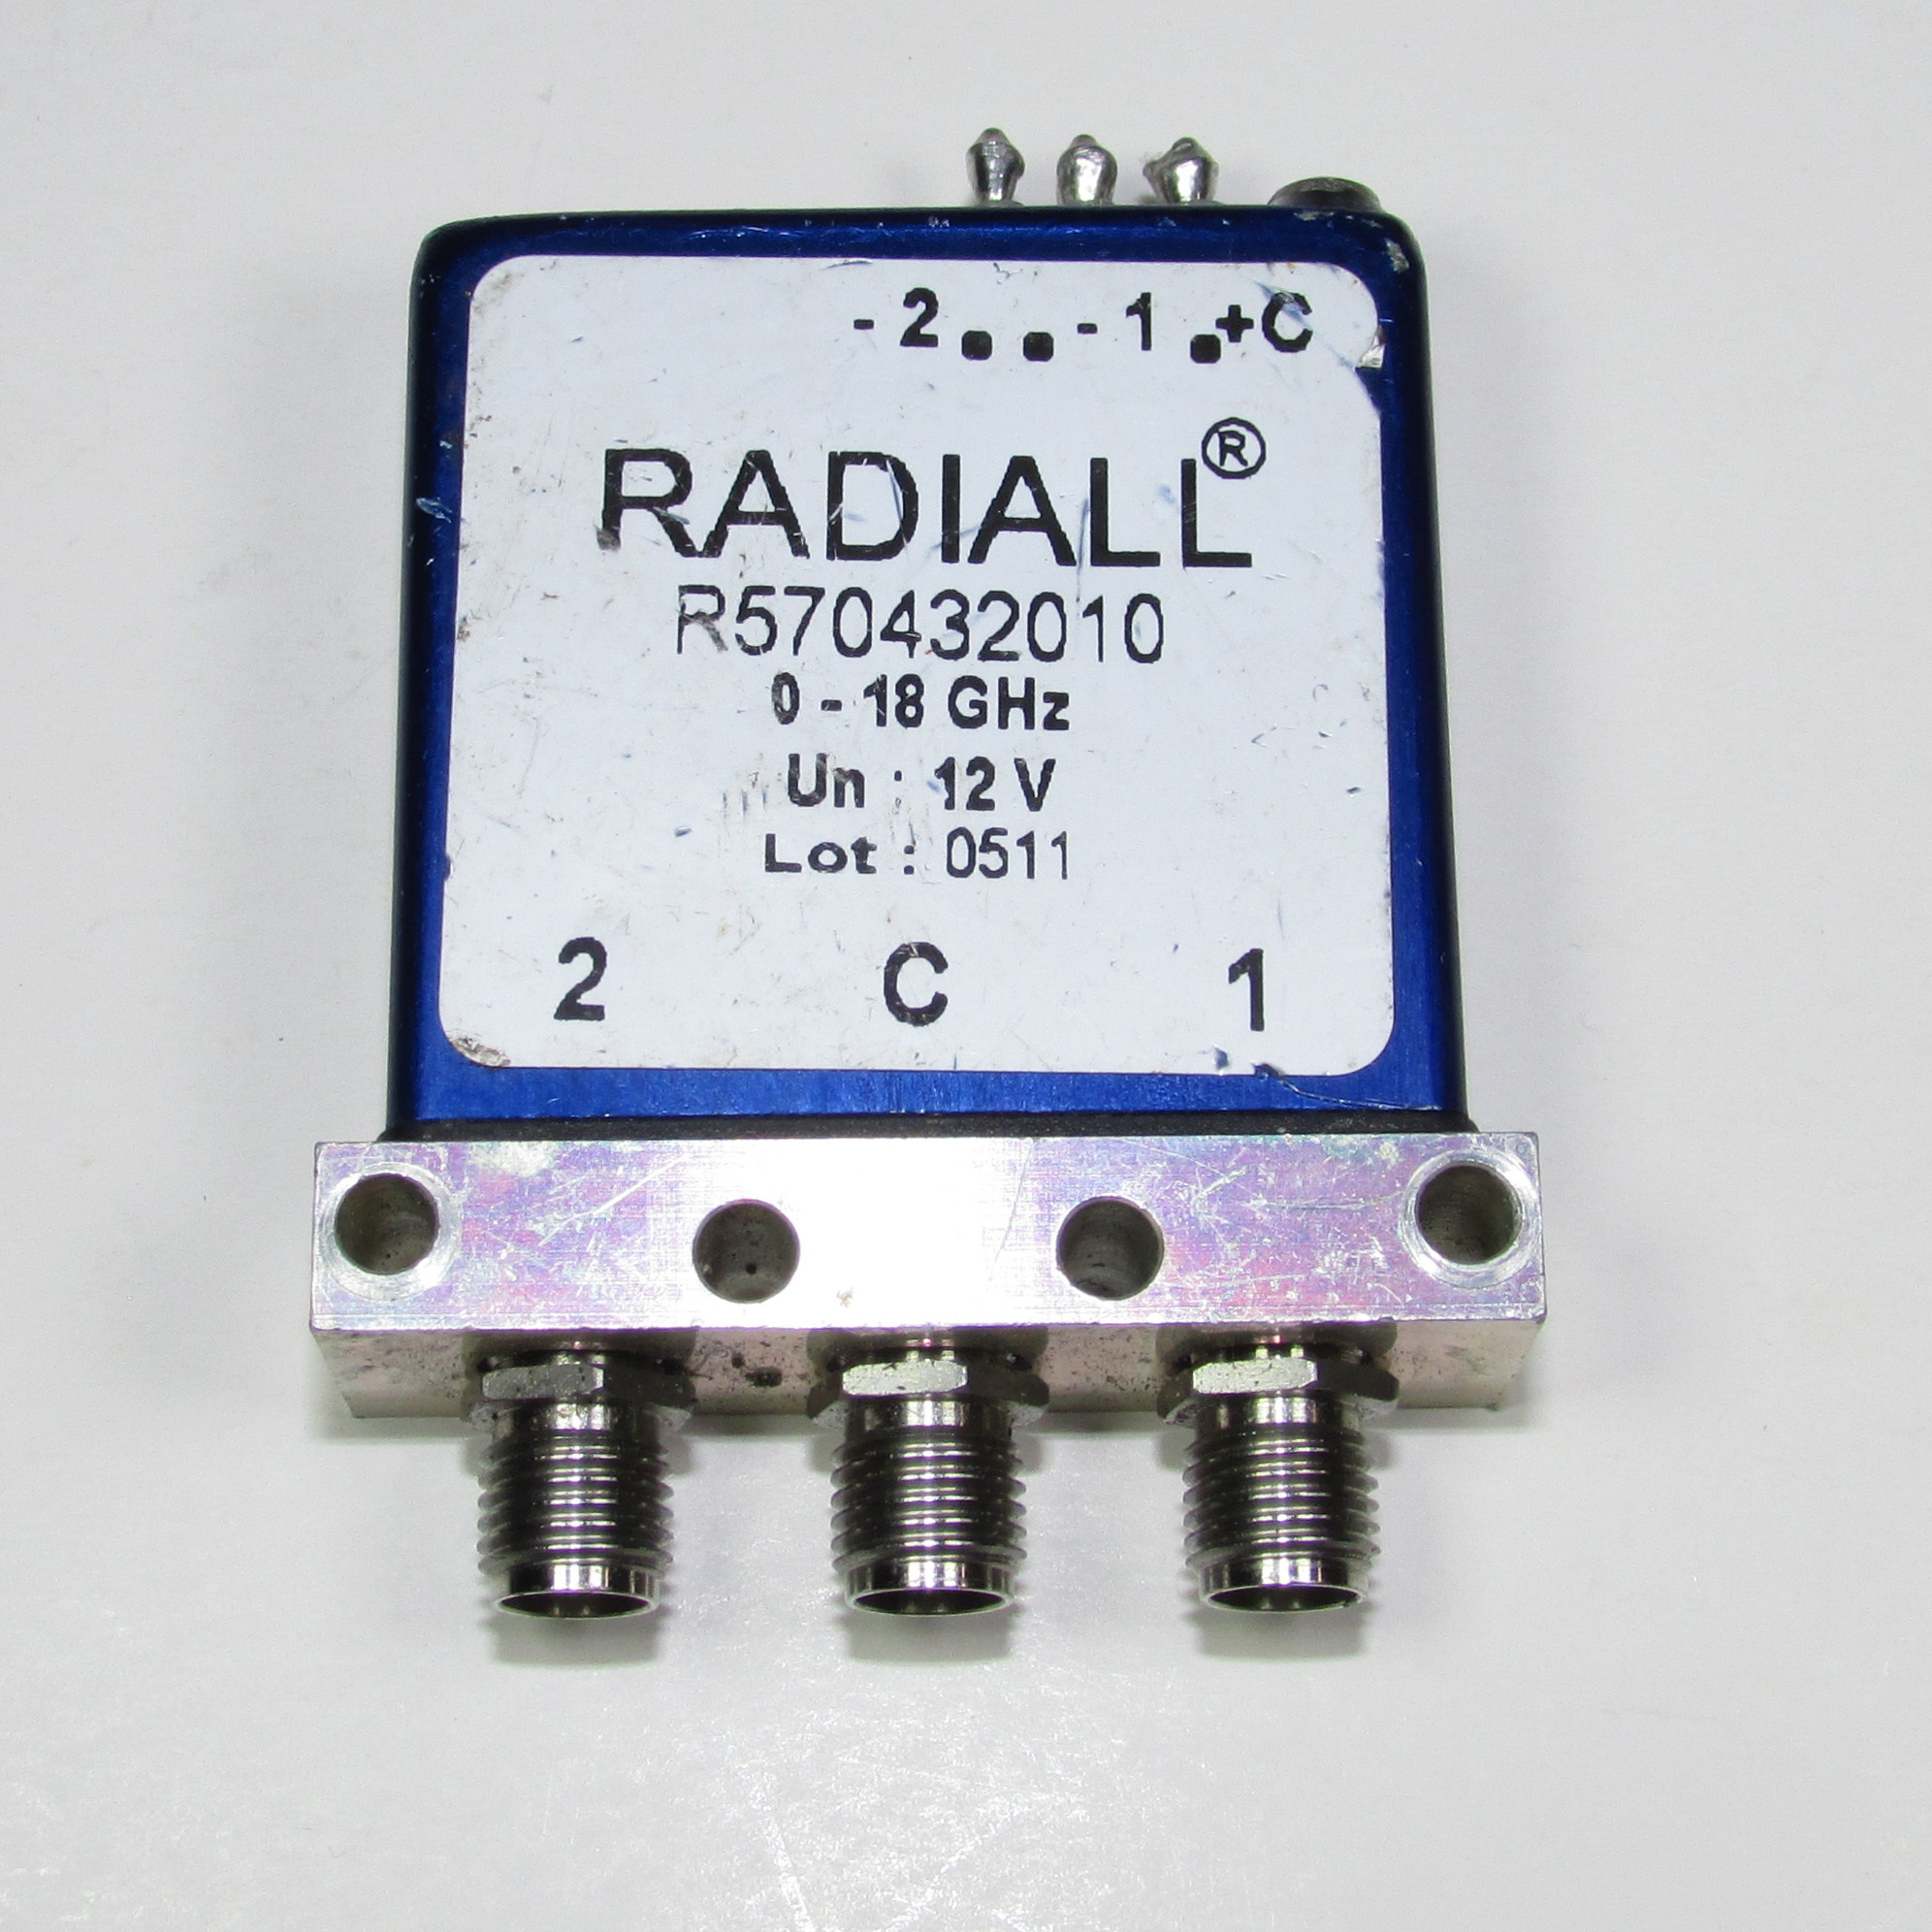 RADIALL R570432010 DC-18GHz 12V SMA single pole double throw RF microwave switch